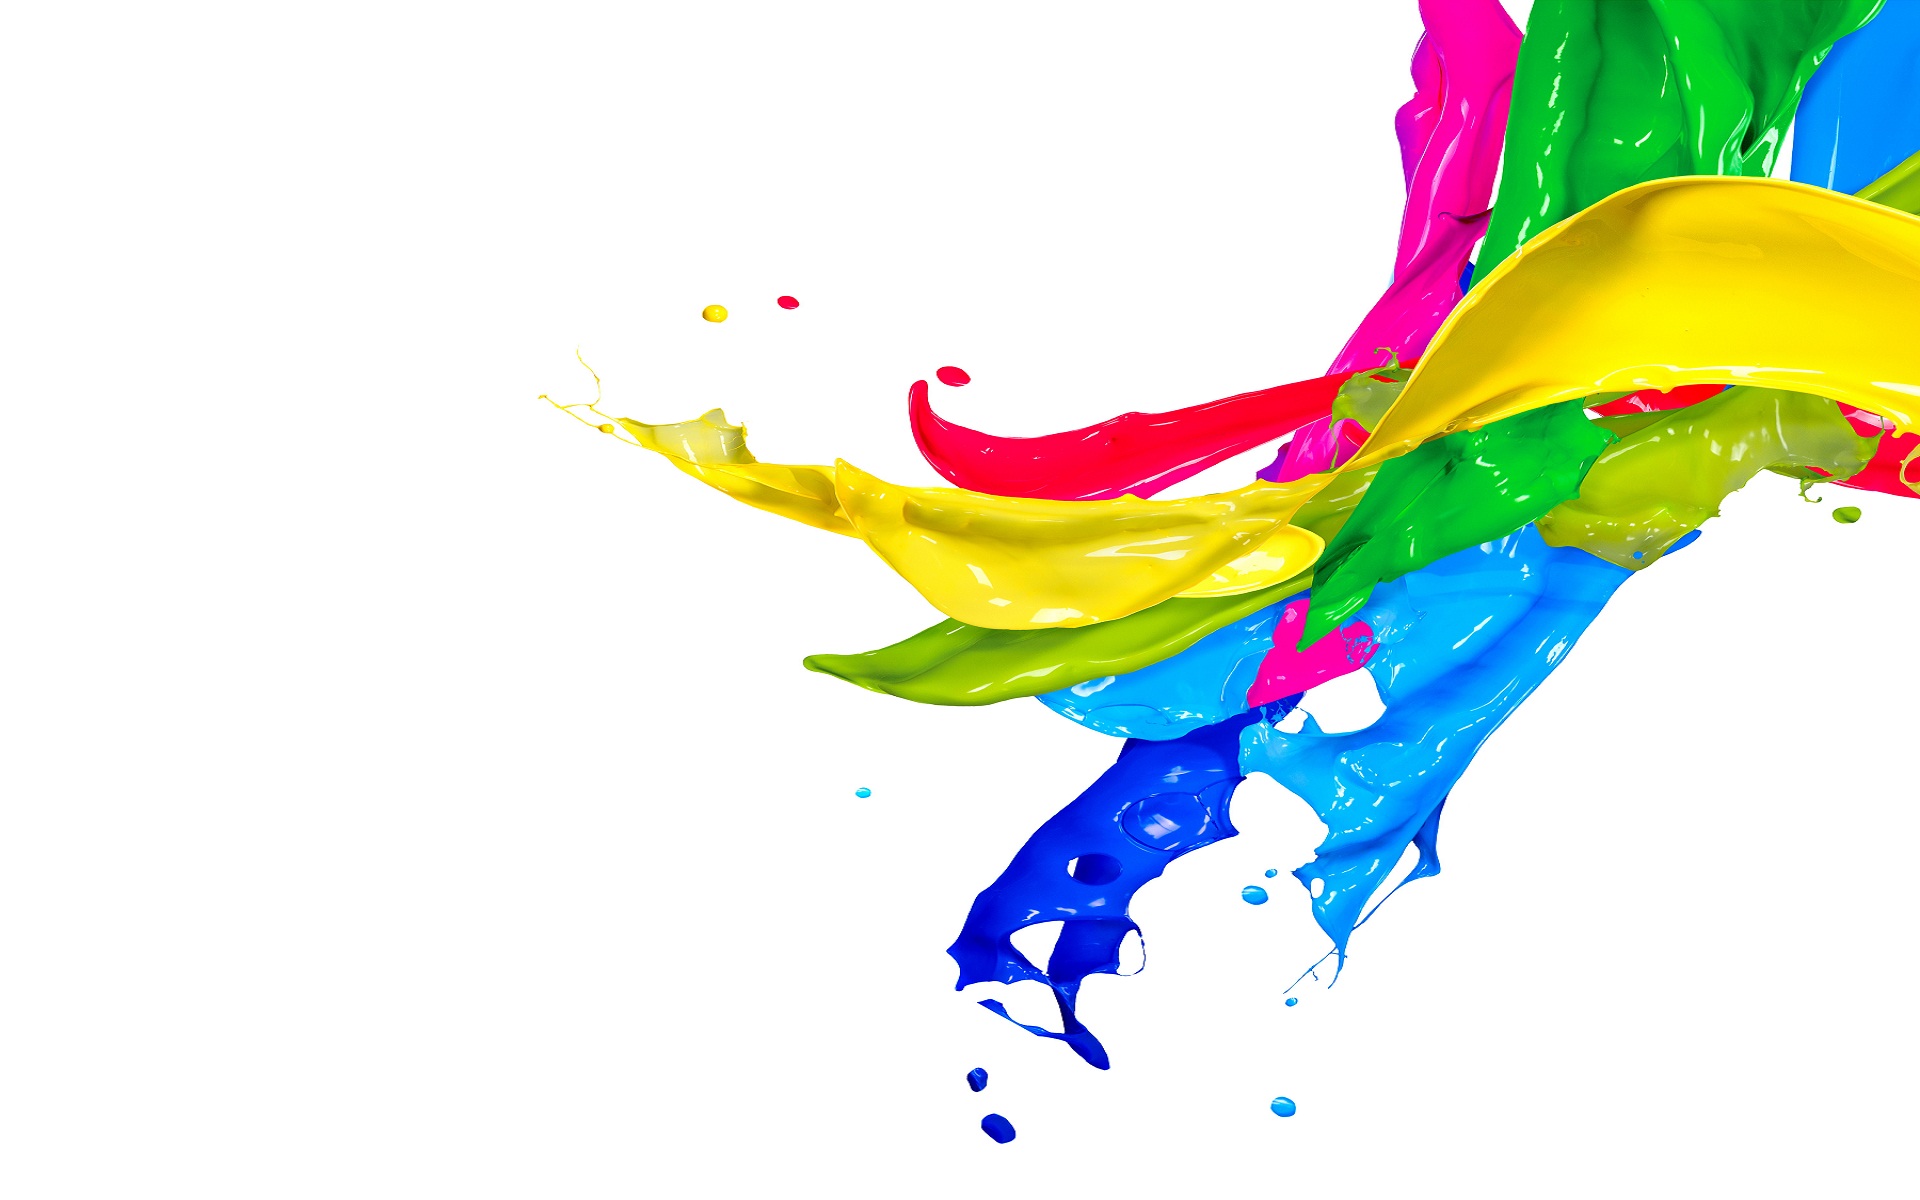 colorful splash wallpaper 46216 | Art | Pinterest | Wallpaper and ...